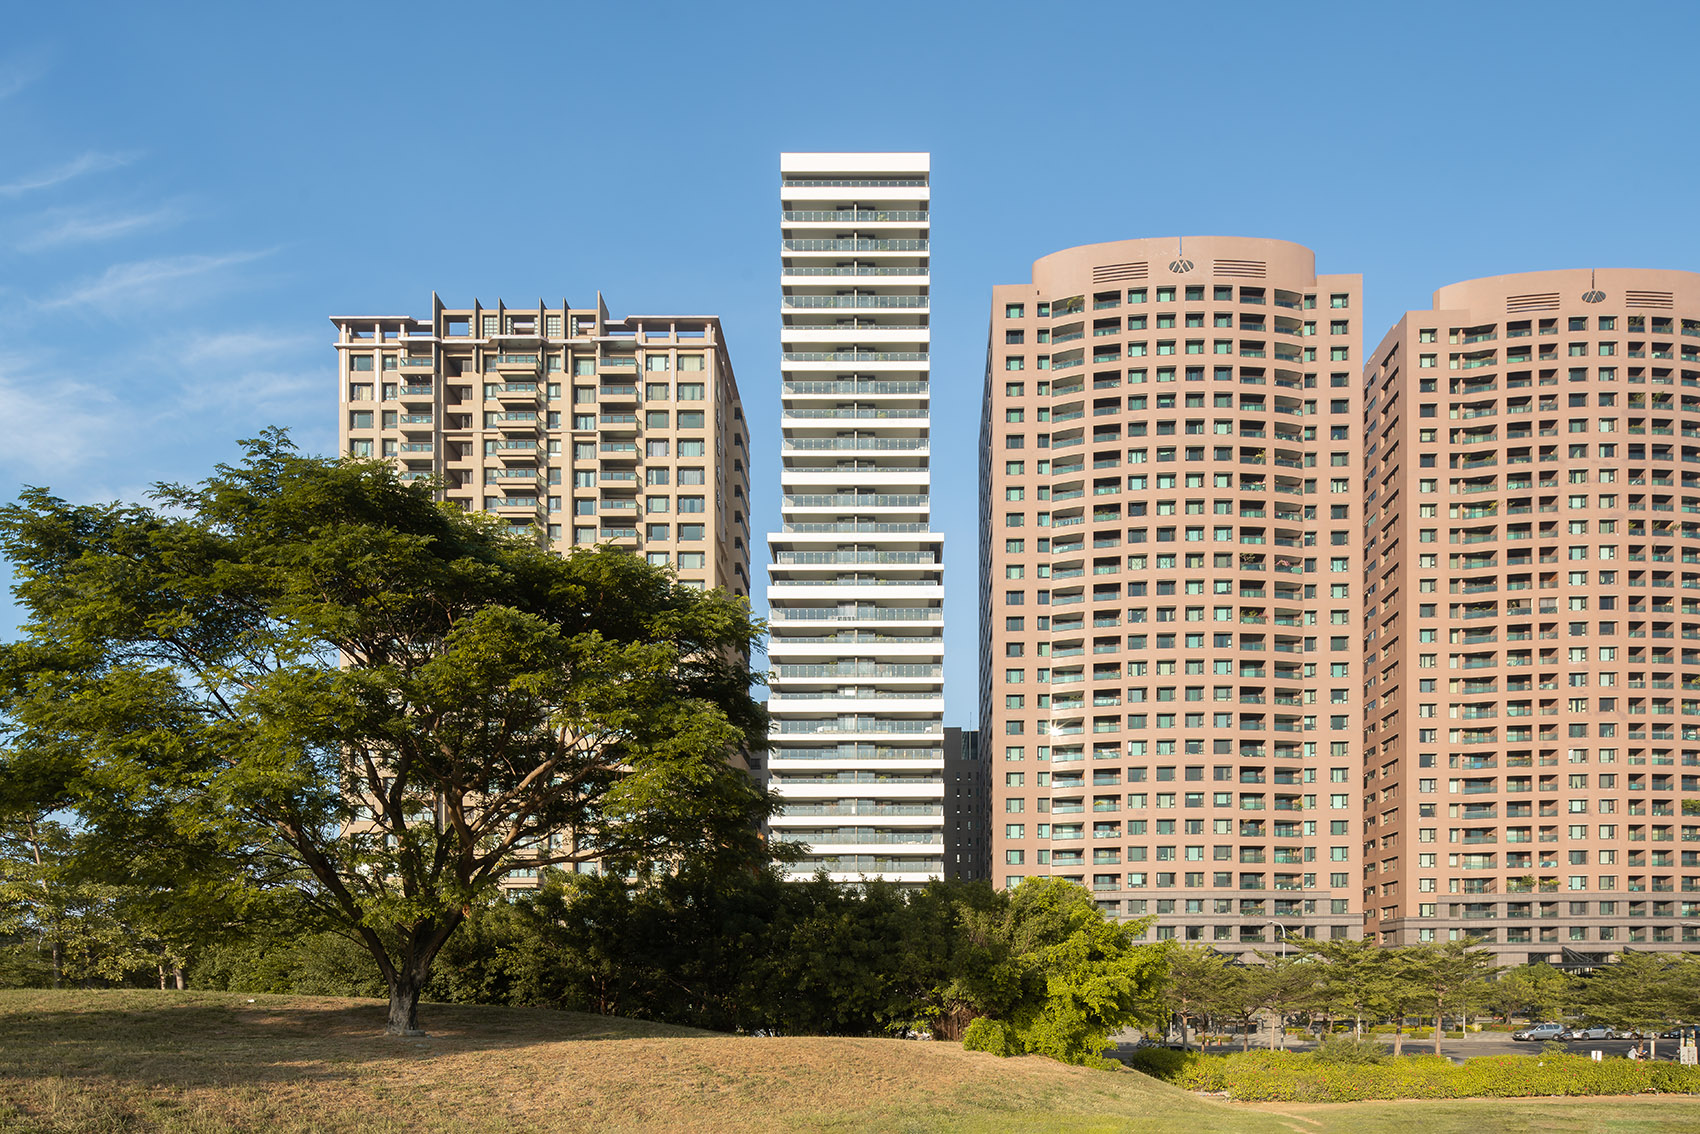 One More住宅楼，台湾/城市环境中的自然生活-5